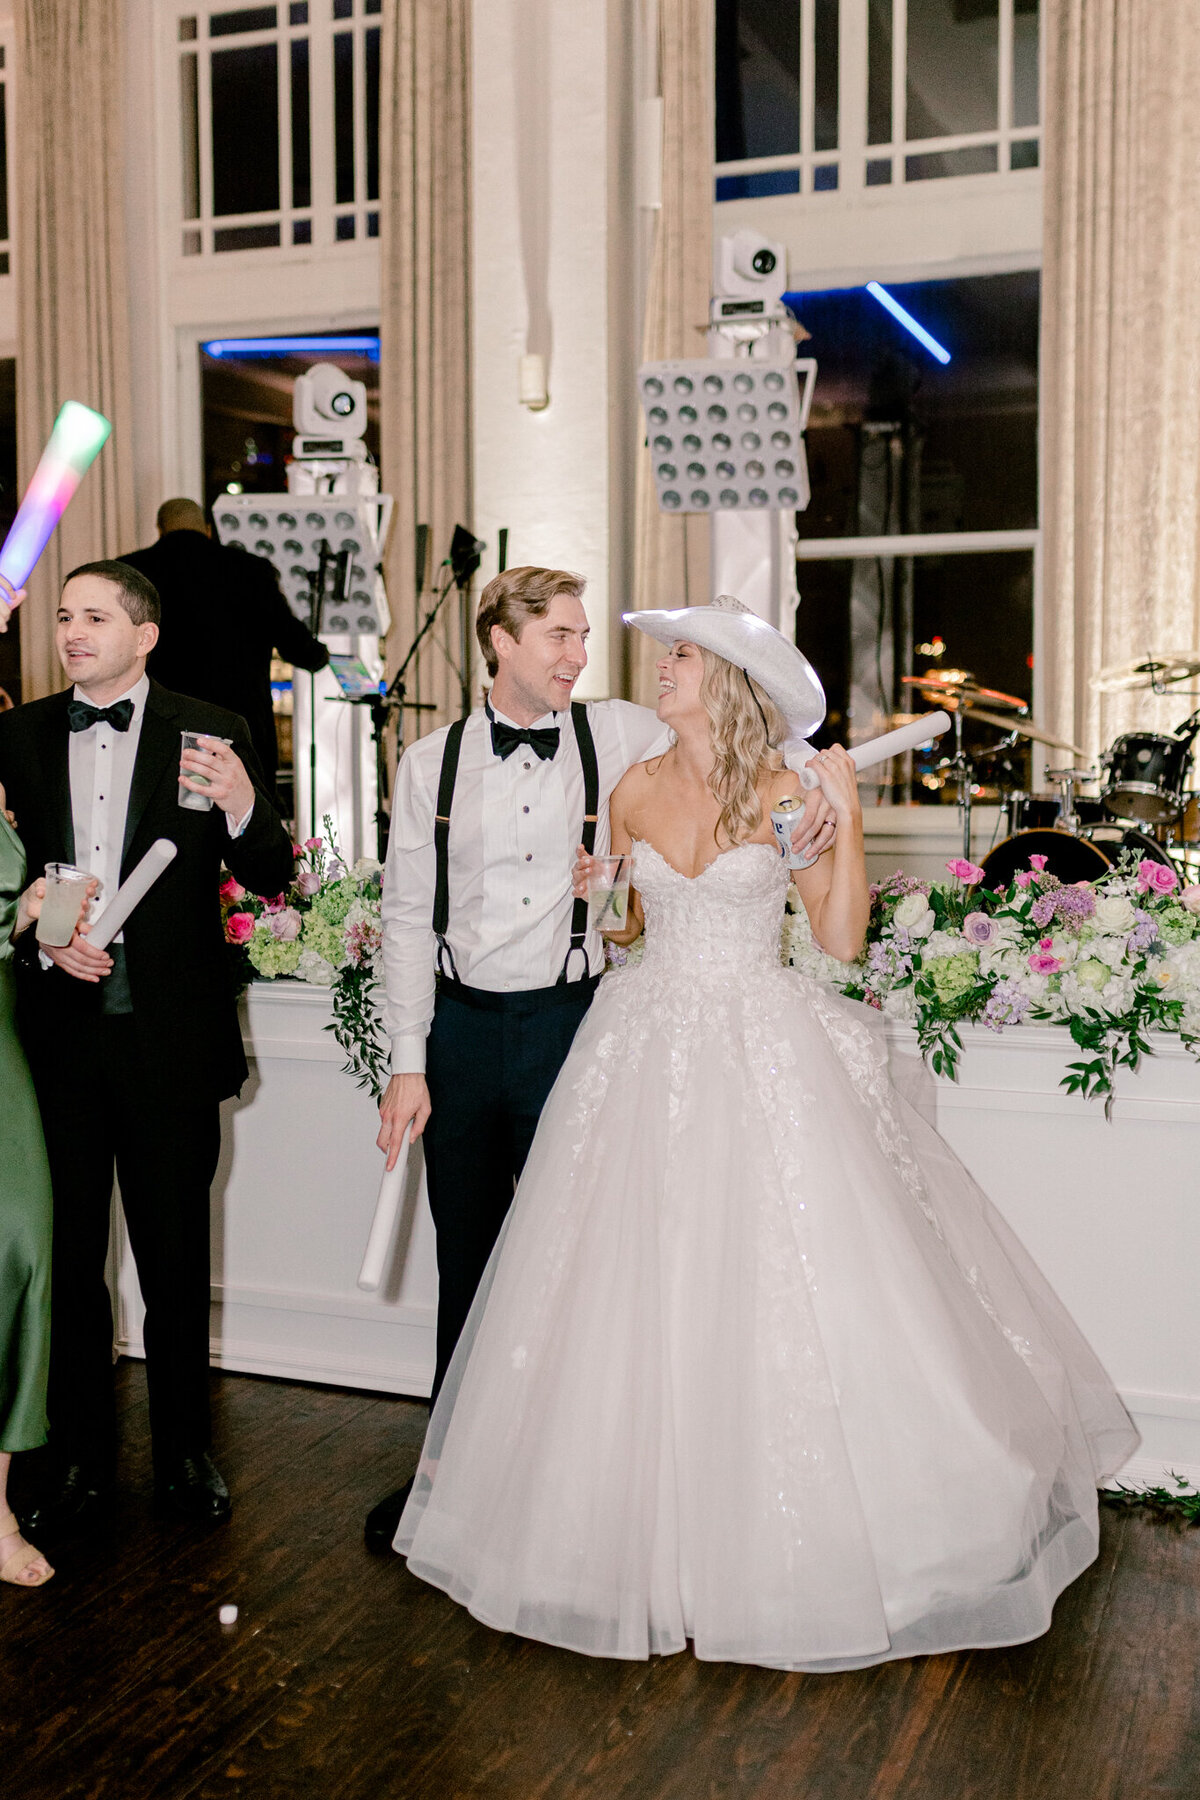 Shelby & Thomas's Wedding at HPUMC The Room on Main | Dallas Wedding Photographer | Sami Kathryn Photography-206